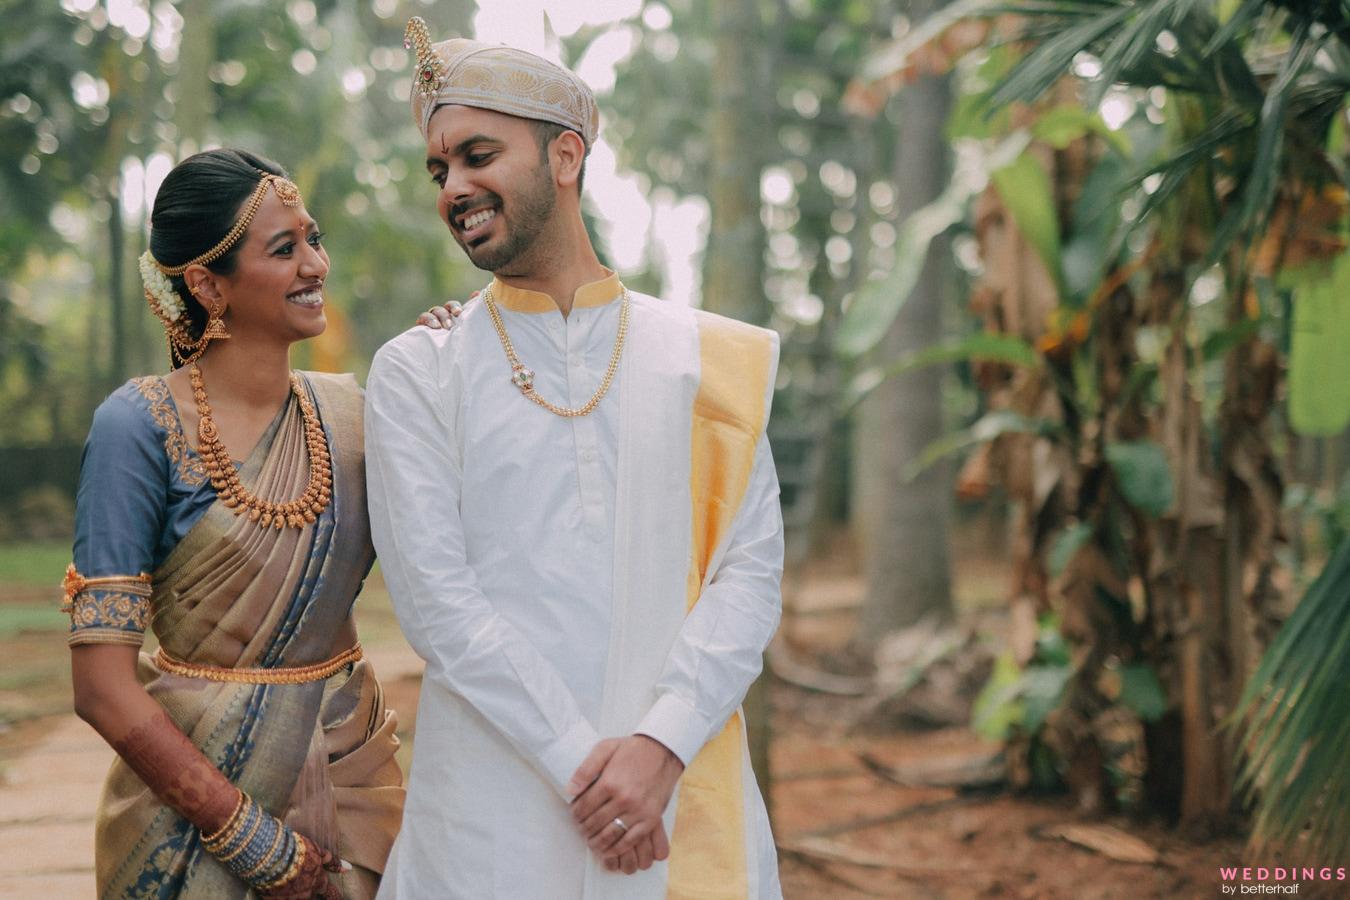 Awesome kerala wedding photography poses ideas for bride & groom | kerala  wedding photoshoot |siri m - YouTube